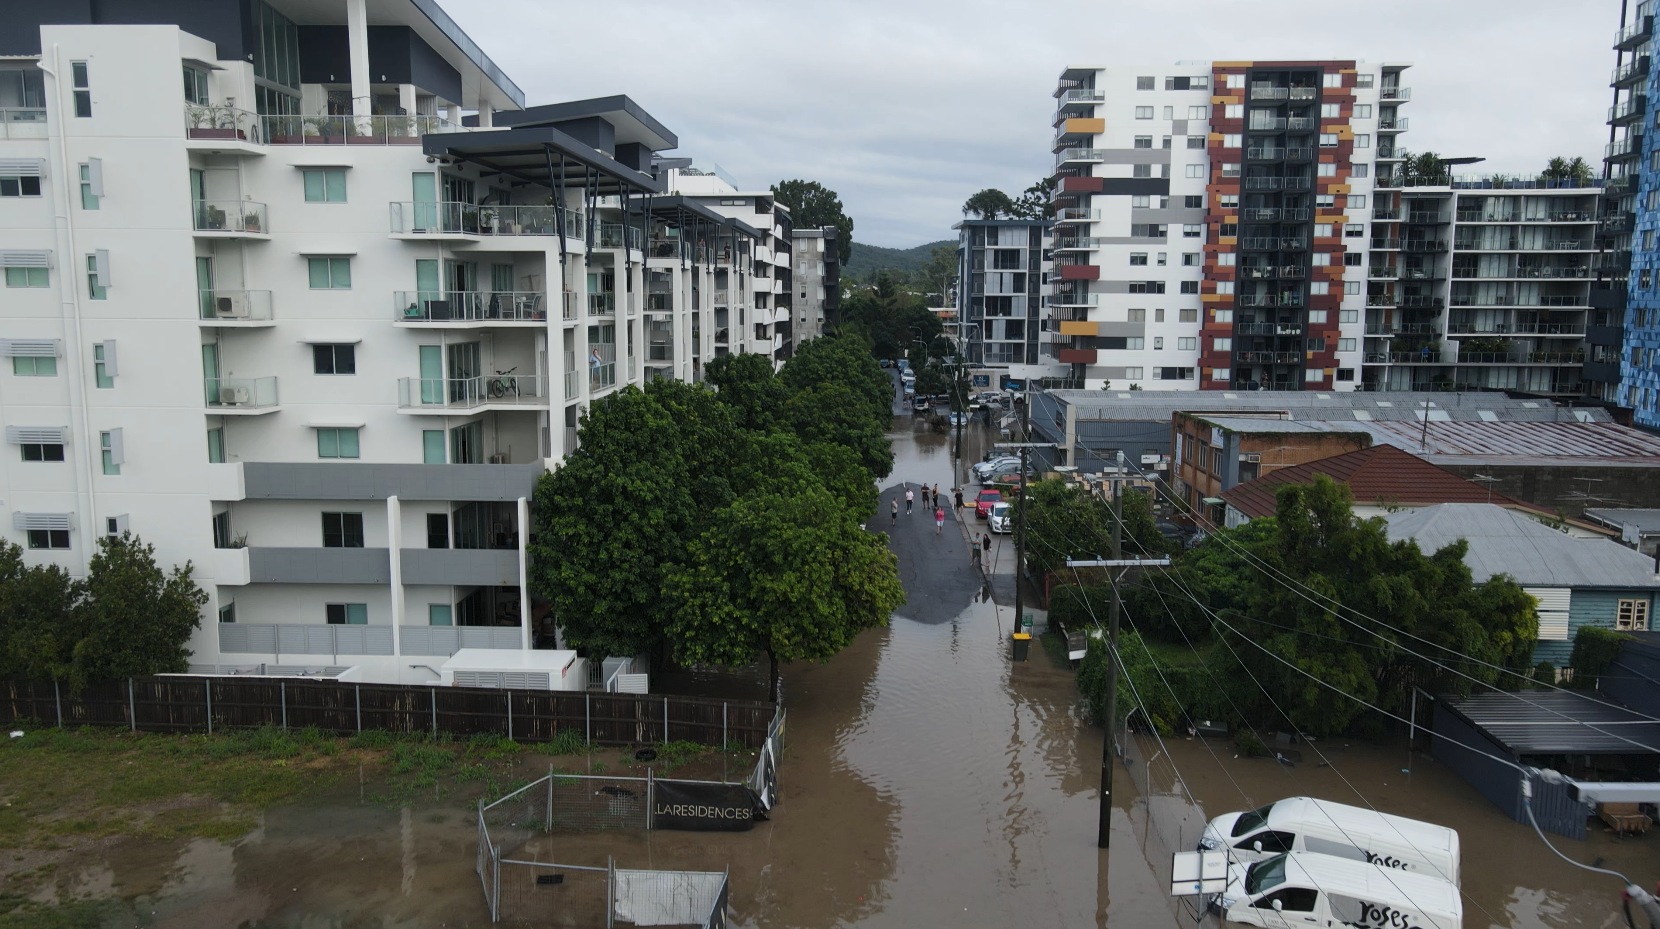 Flooding around apartment blocks